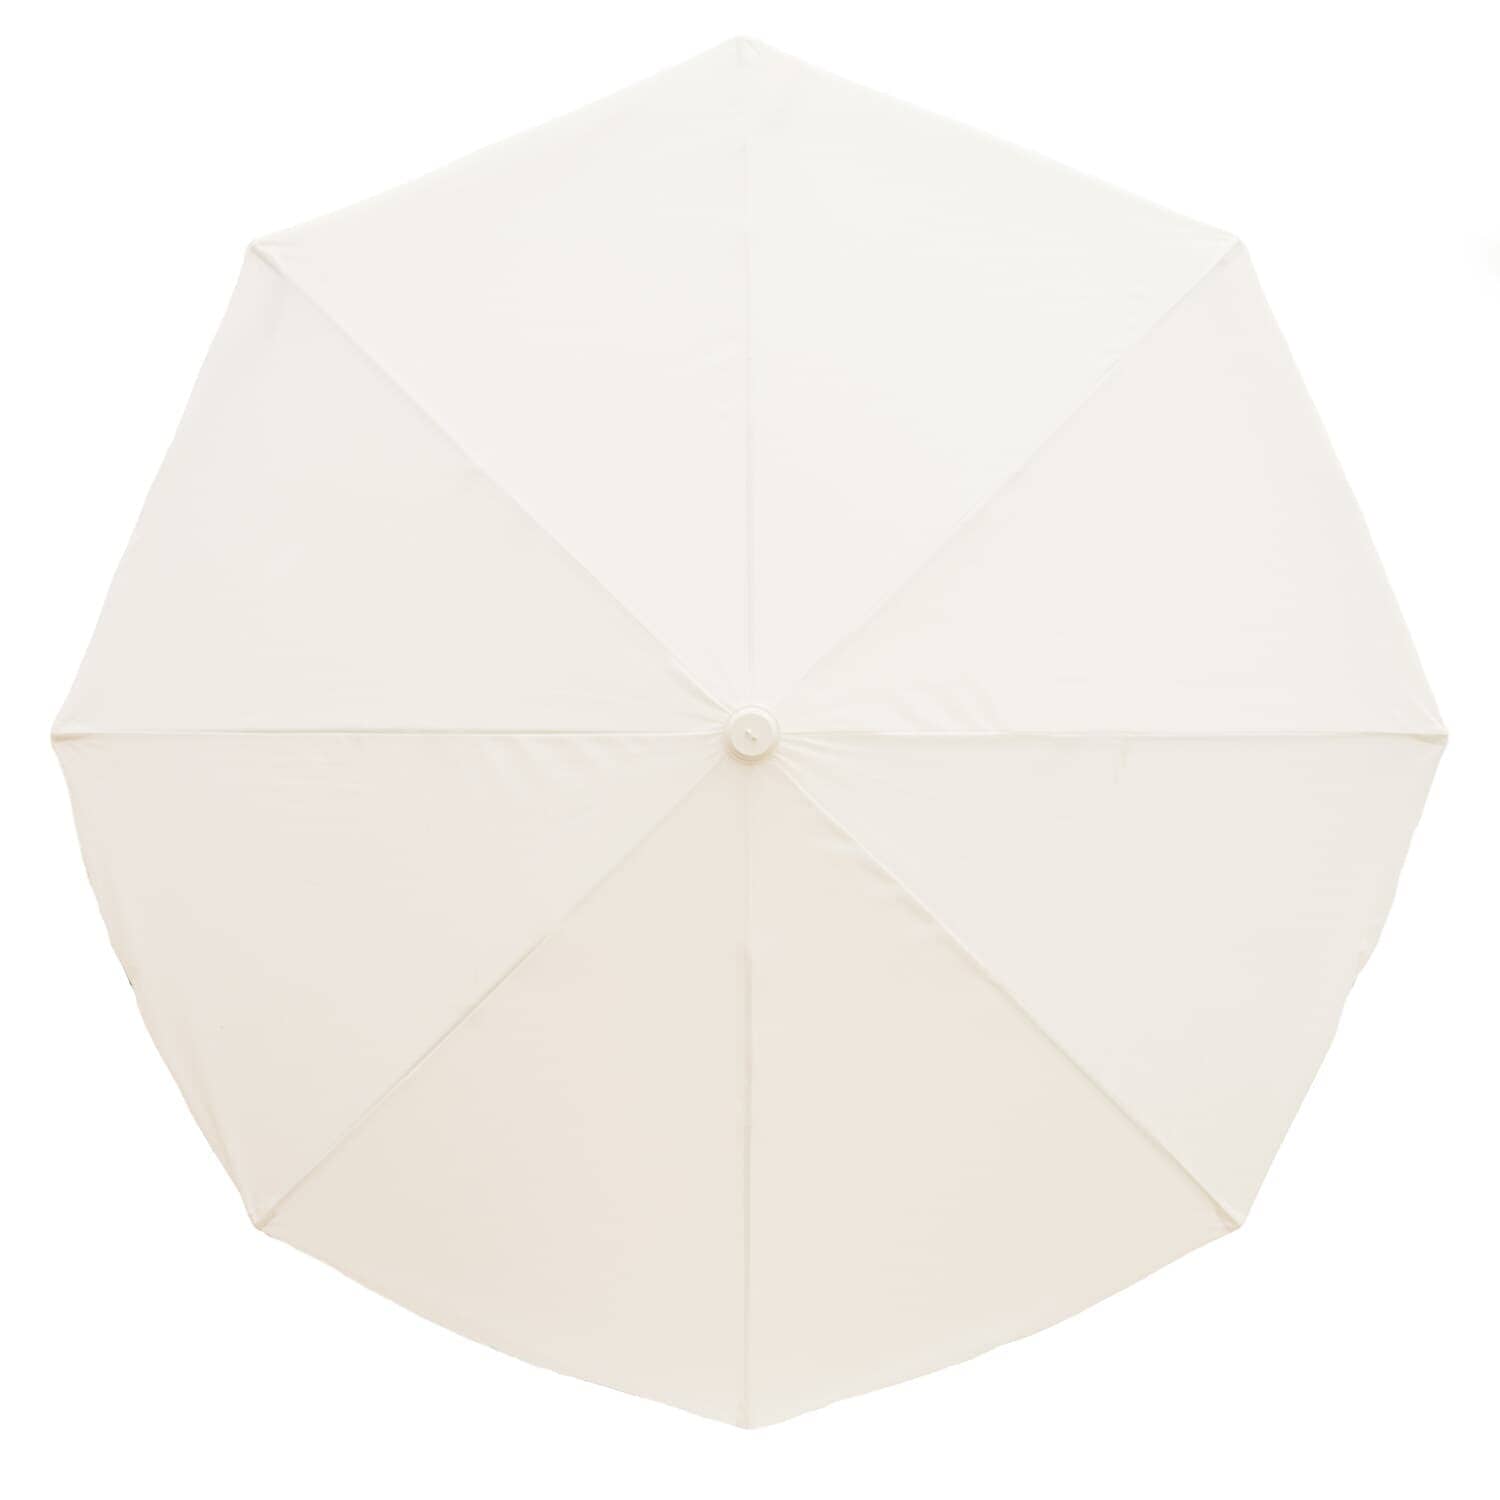 Studio image of Amalfi Umbrella in Riviera White